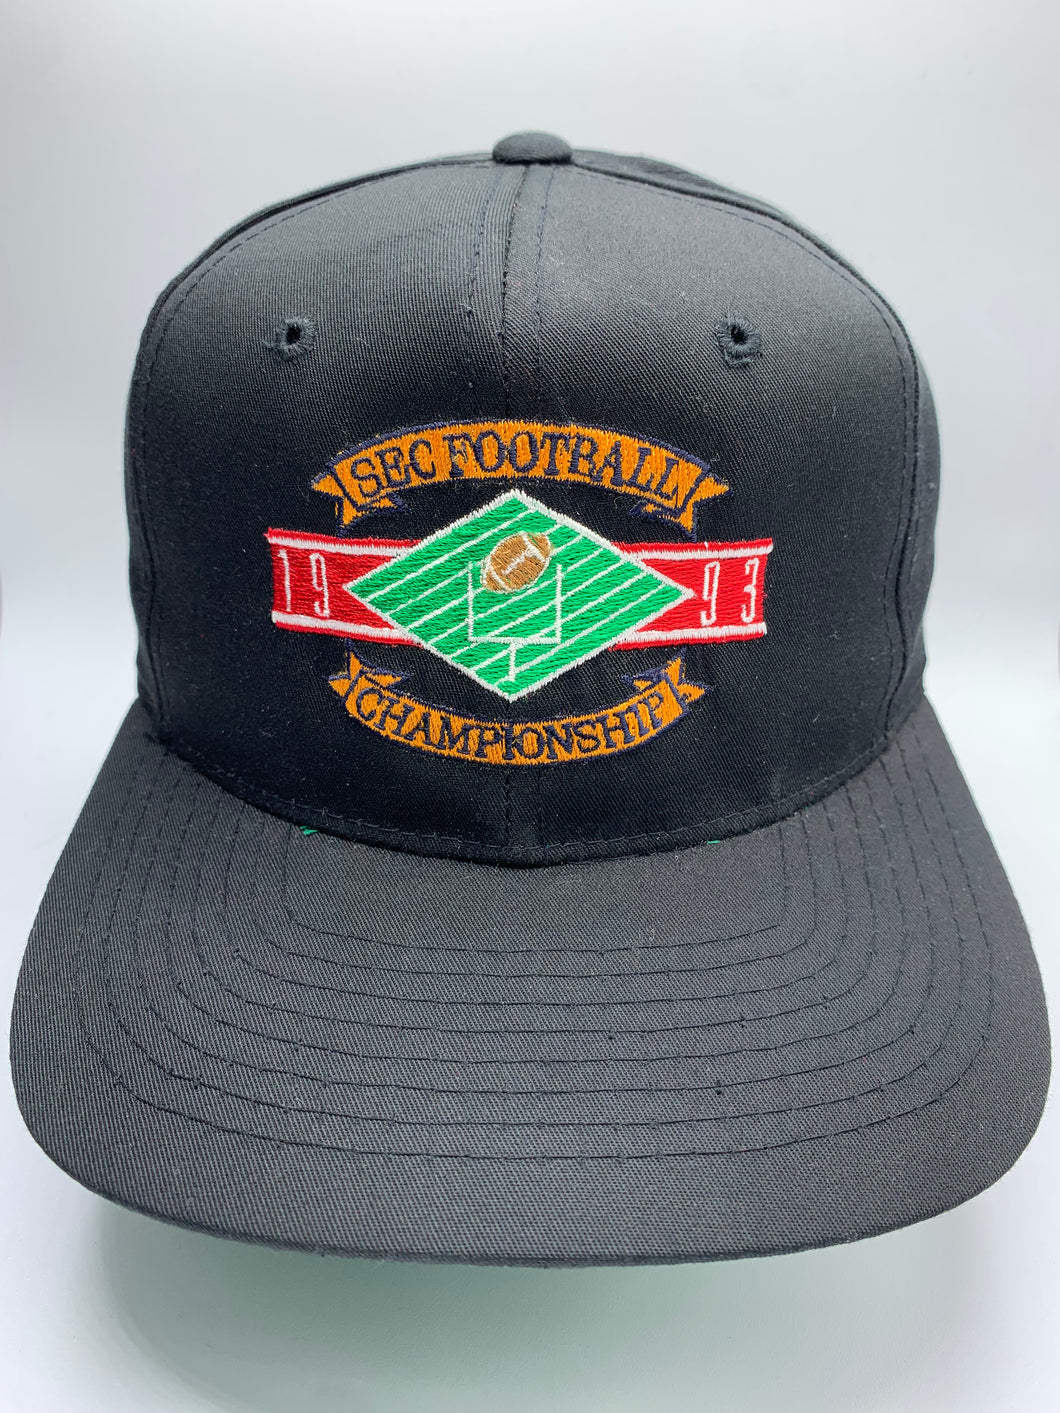 1993 SEC Championship X Starter Rare Snapback Hat